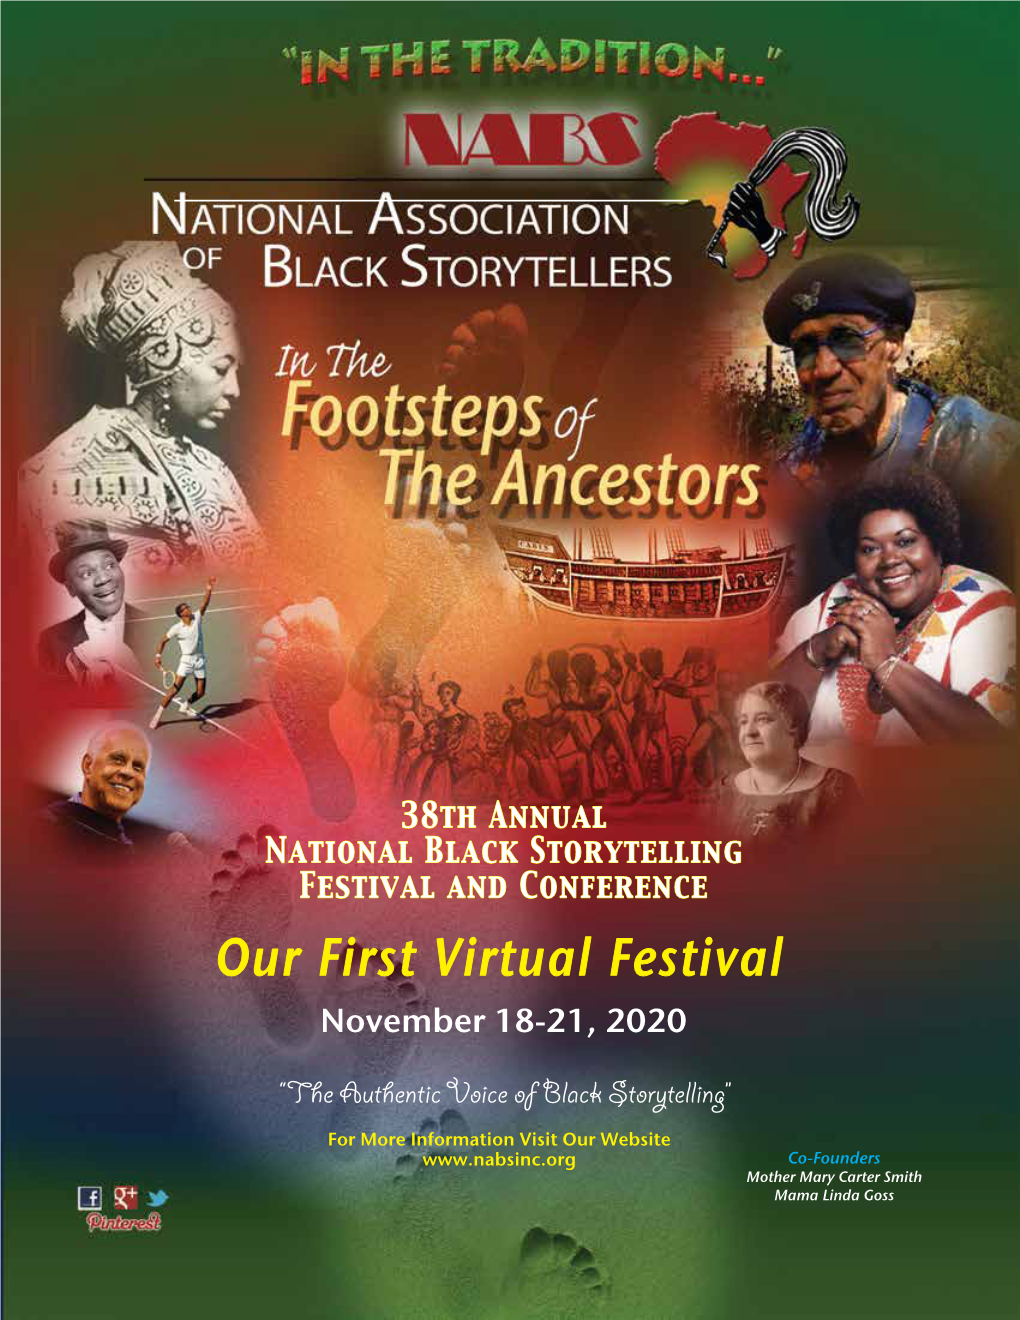 Our First Virtual Festival November 18-21, 2020